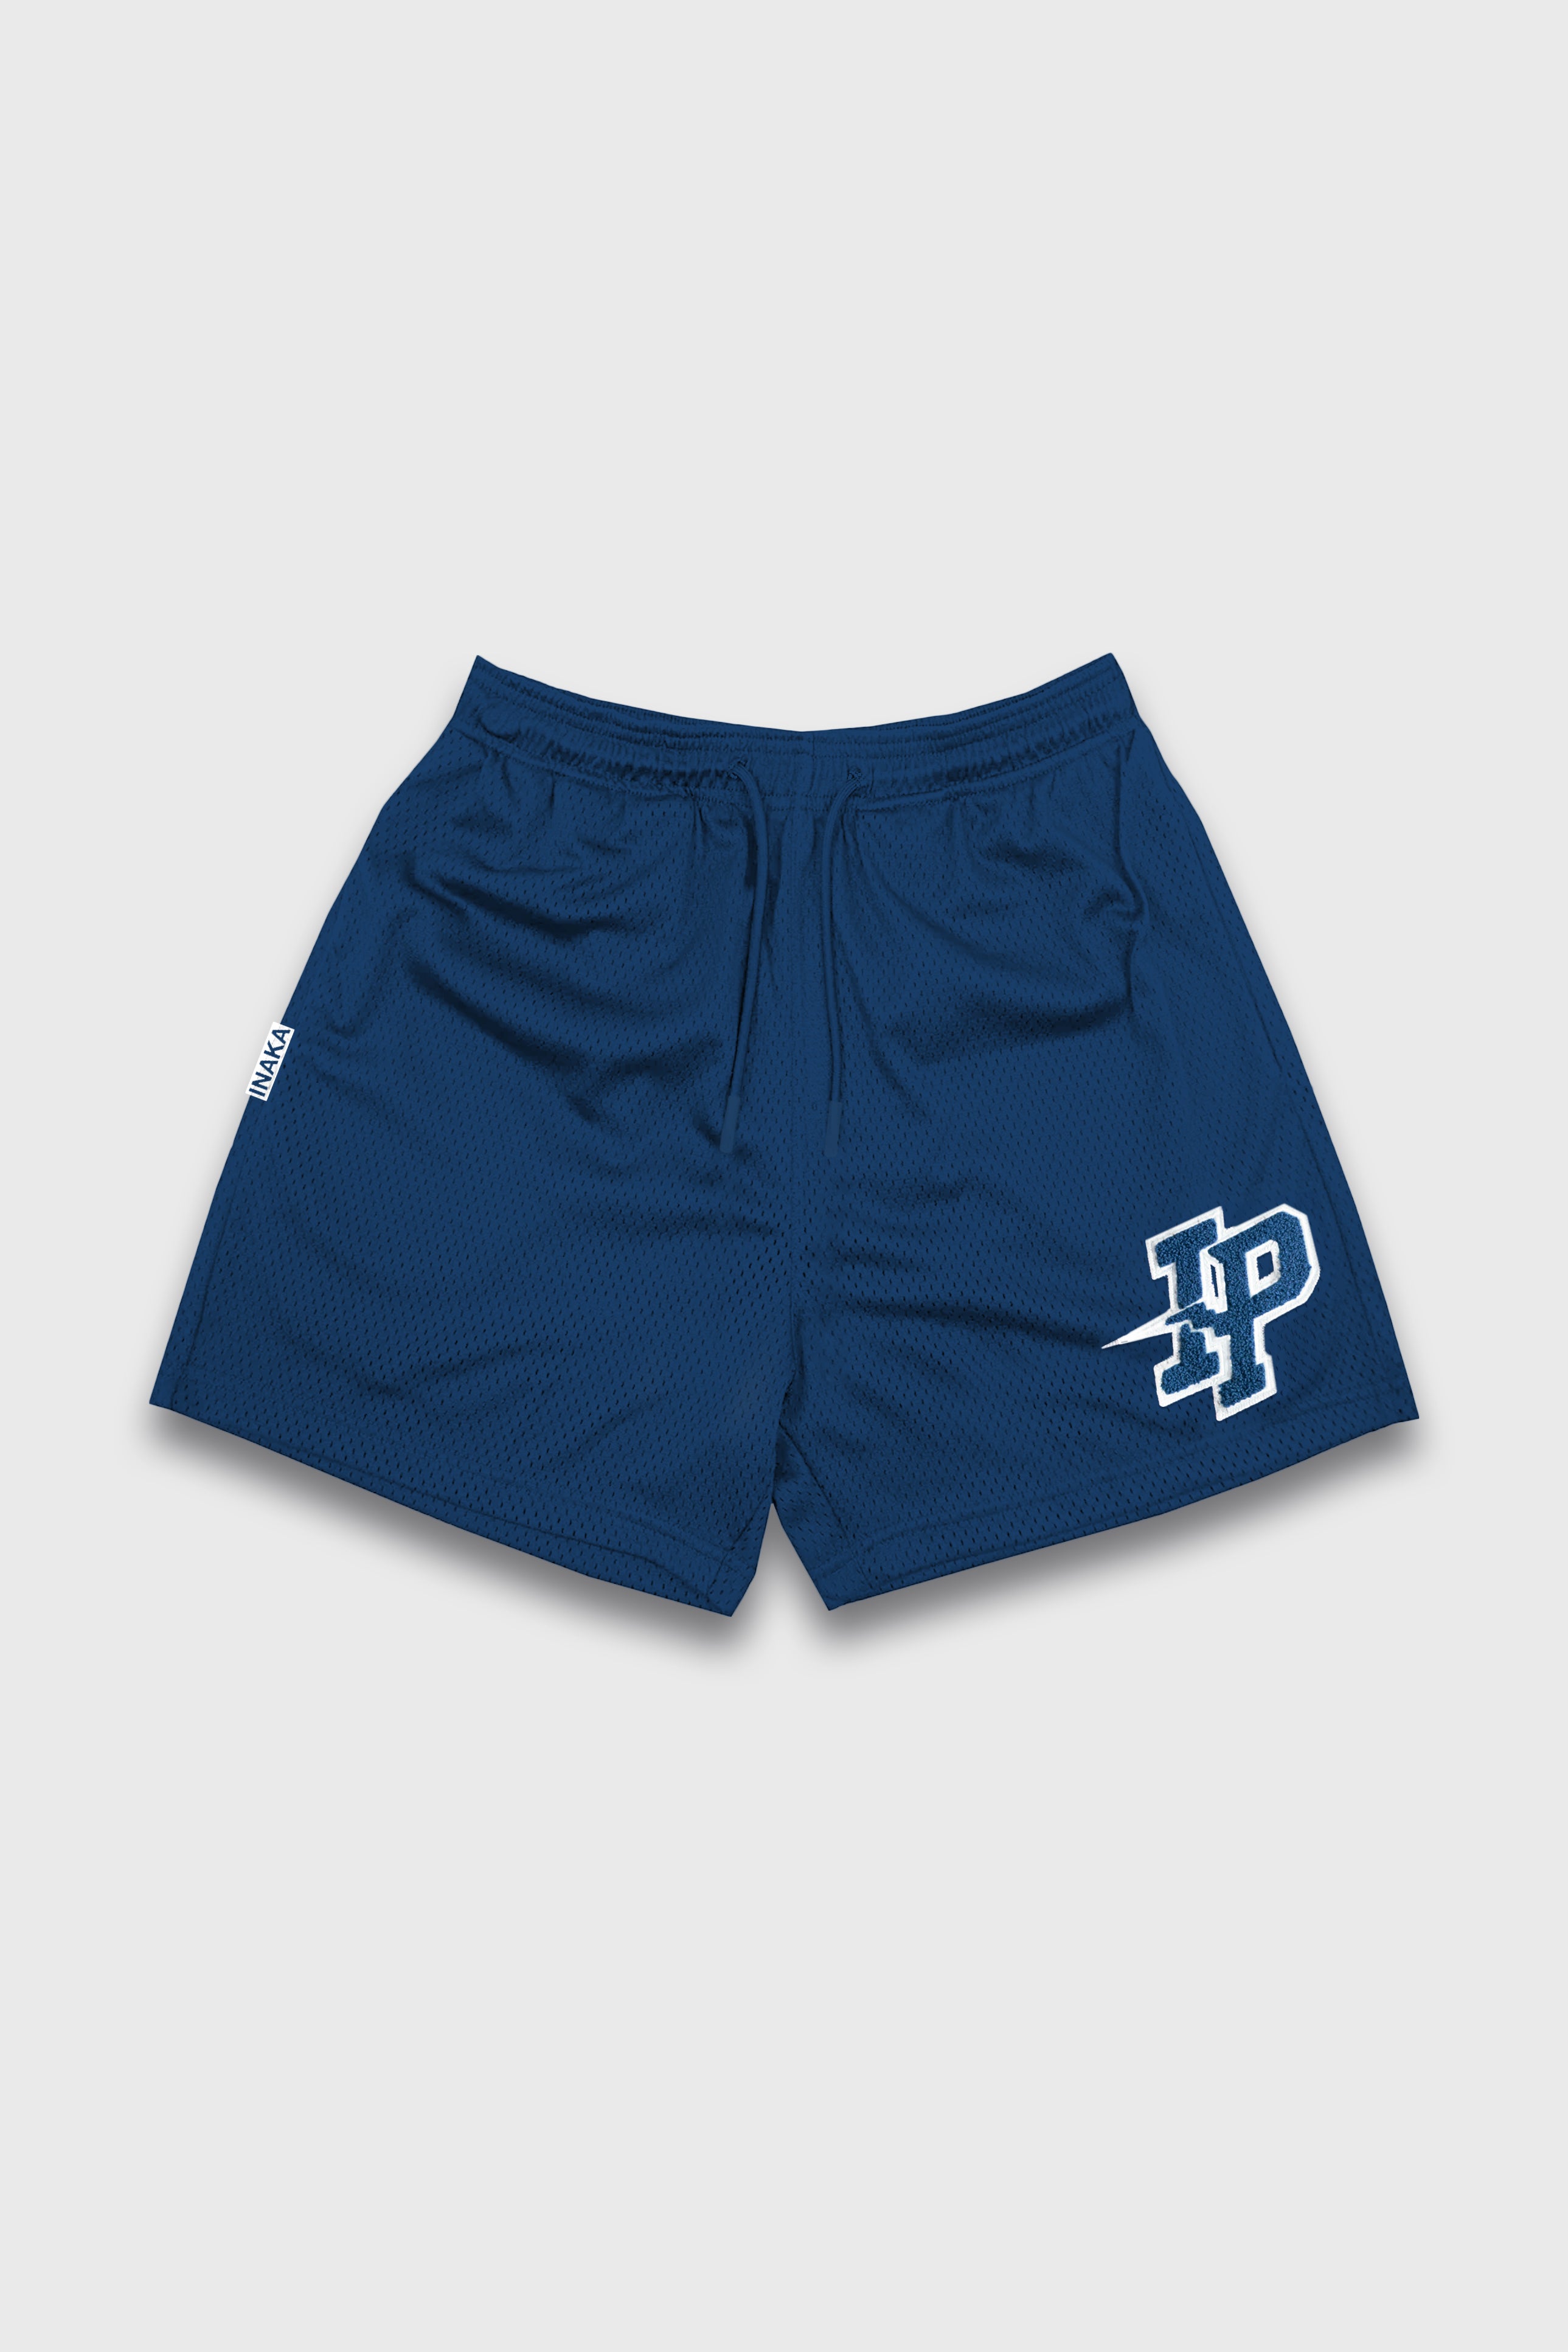 Patch Basic Shorts - Navy